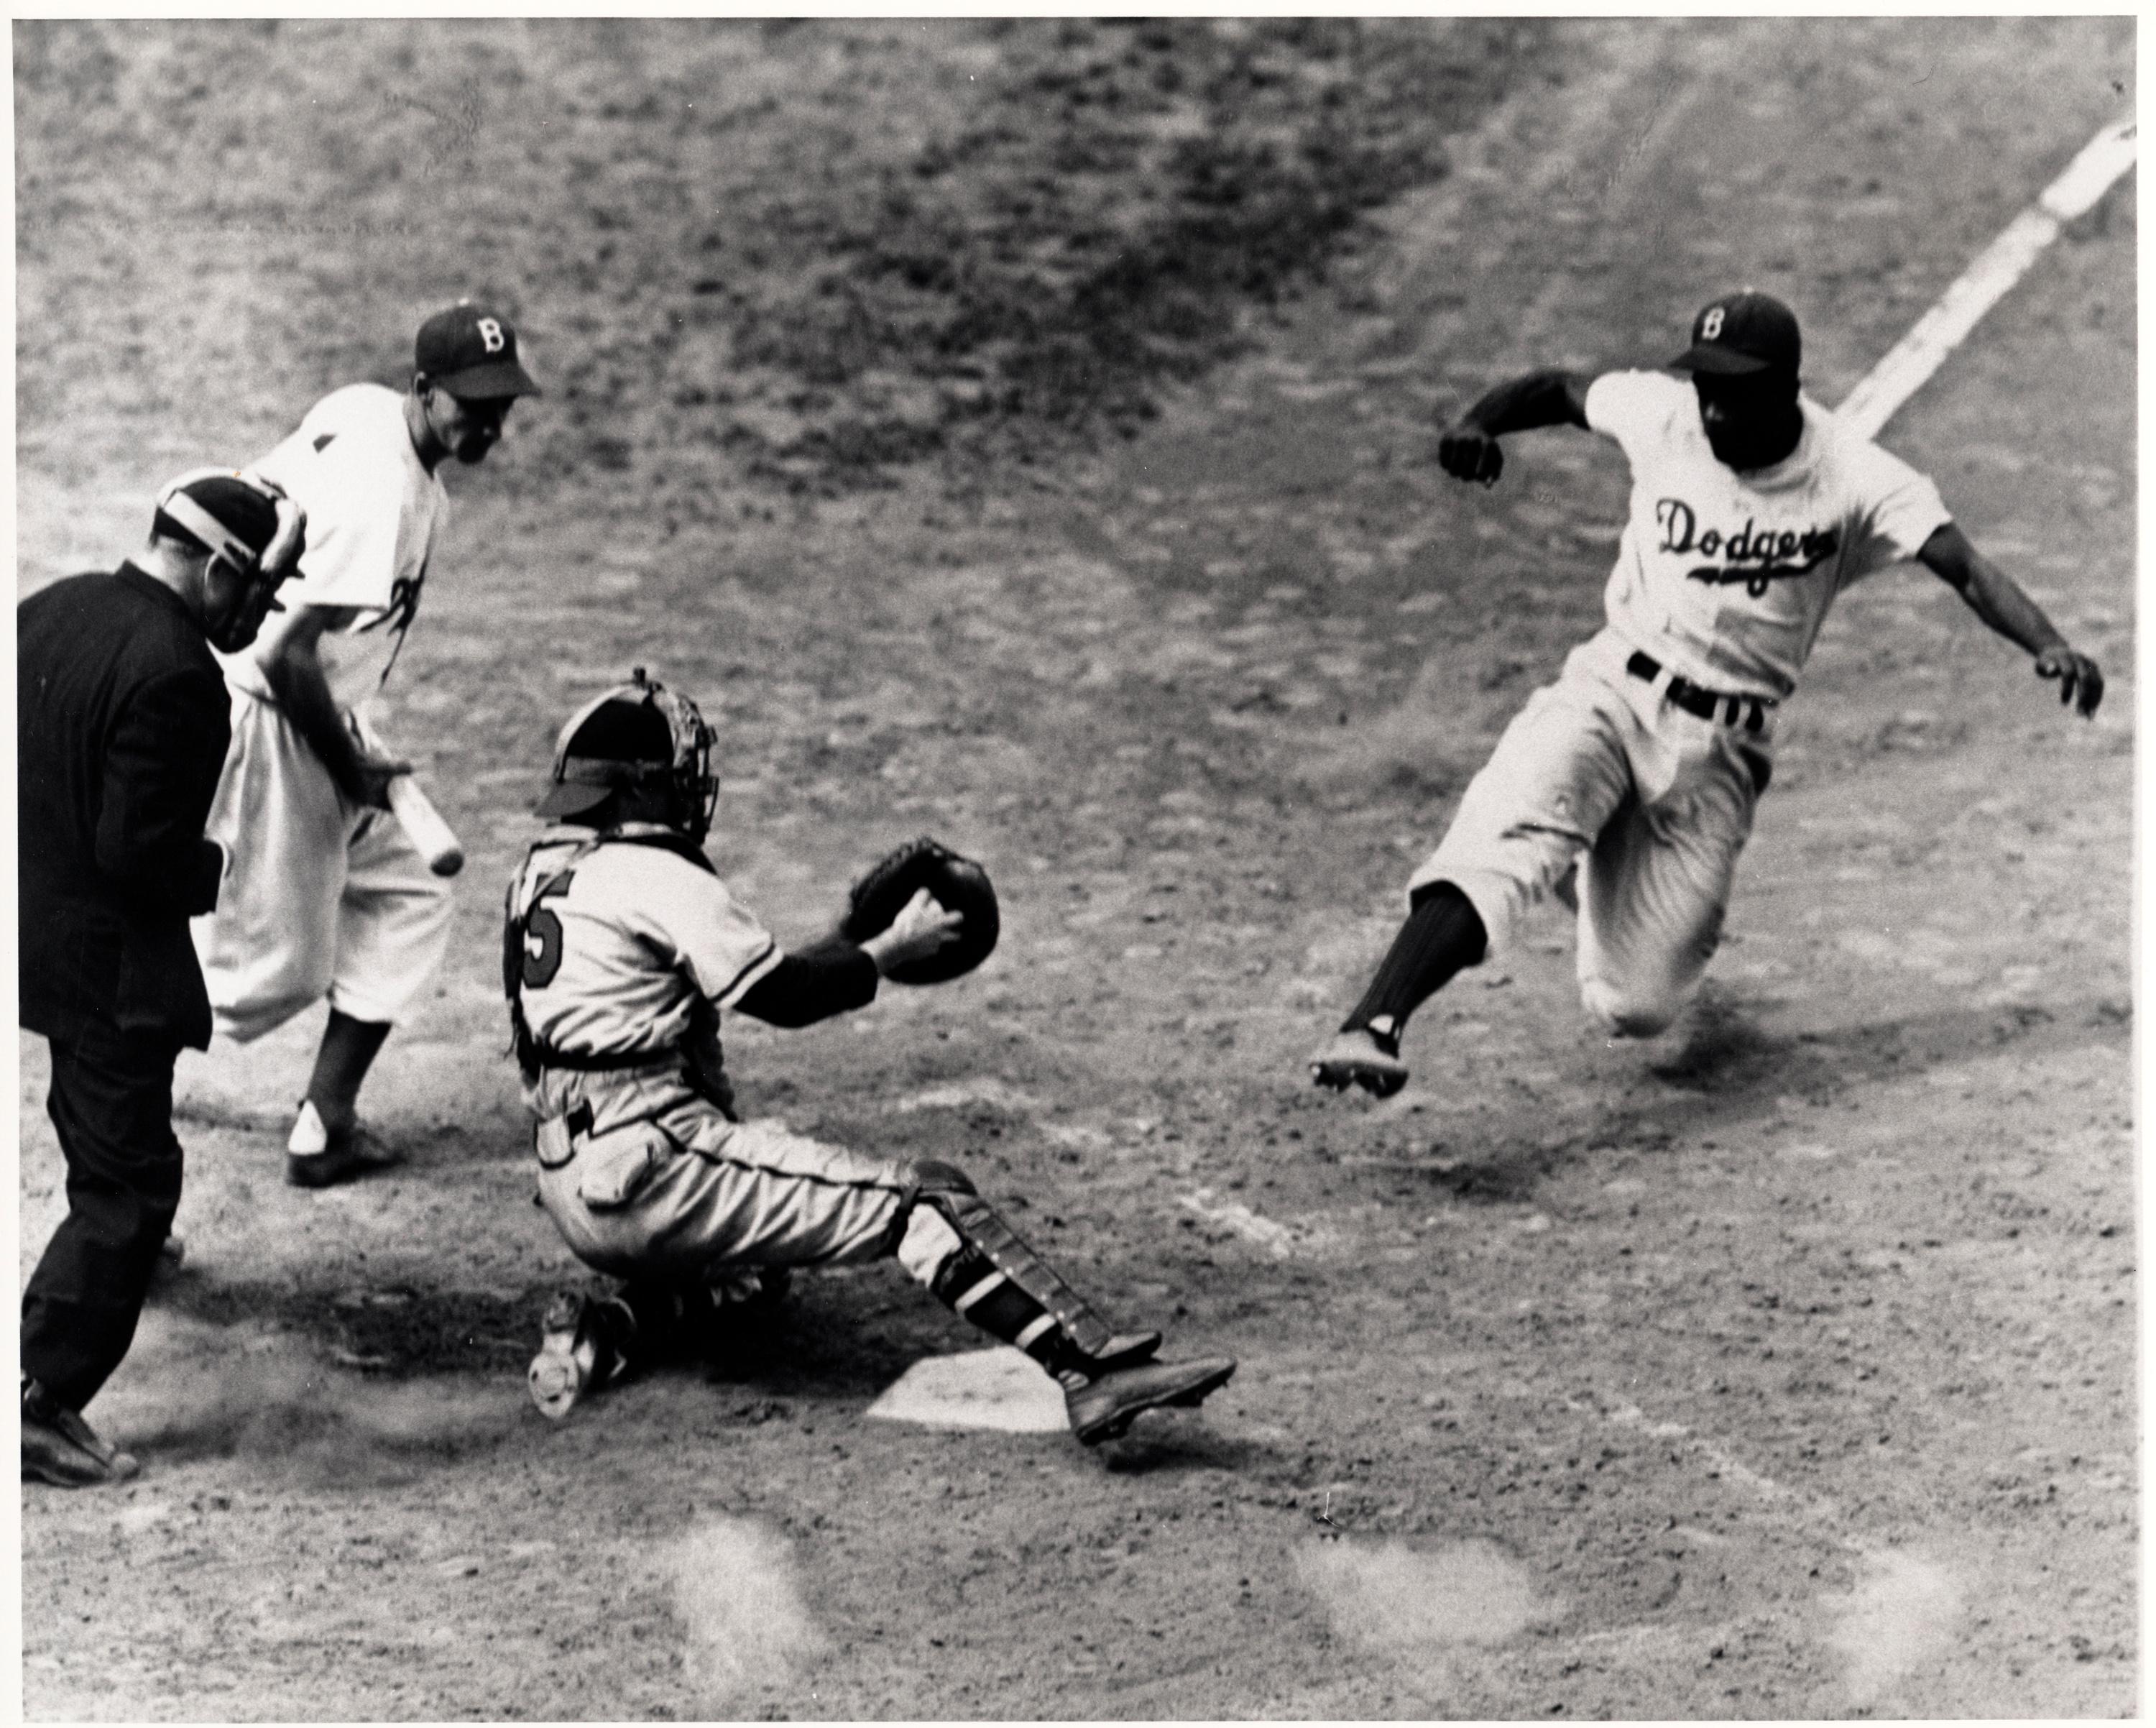 Ken Burns iconic documentary series “Baseball” coming to Panhandle PBS